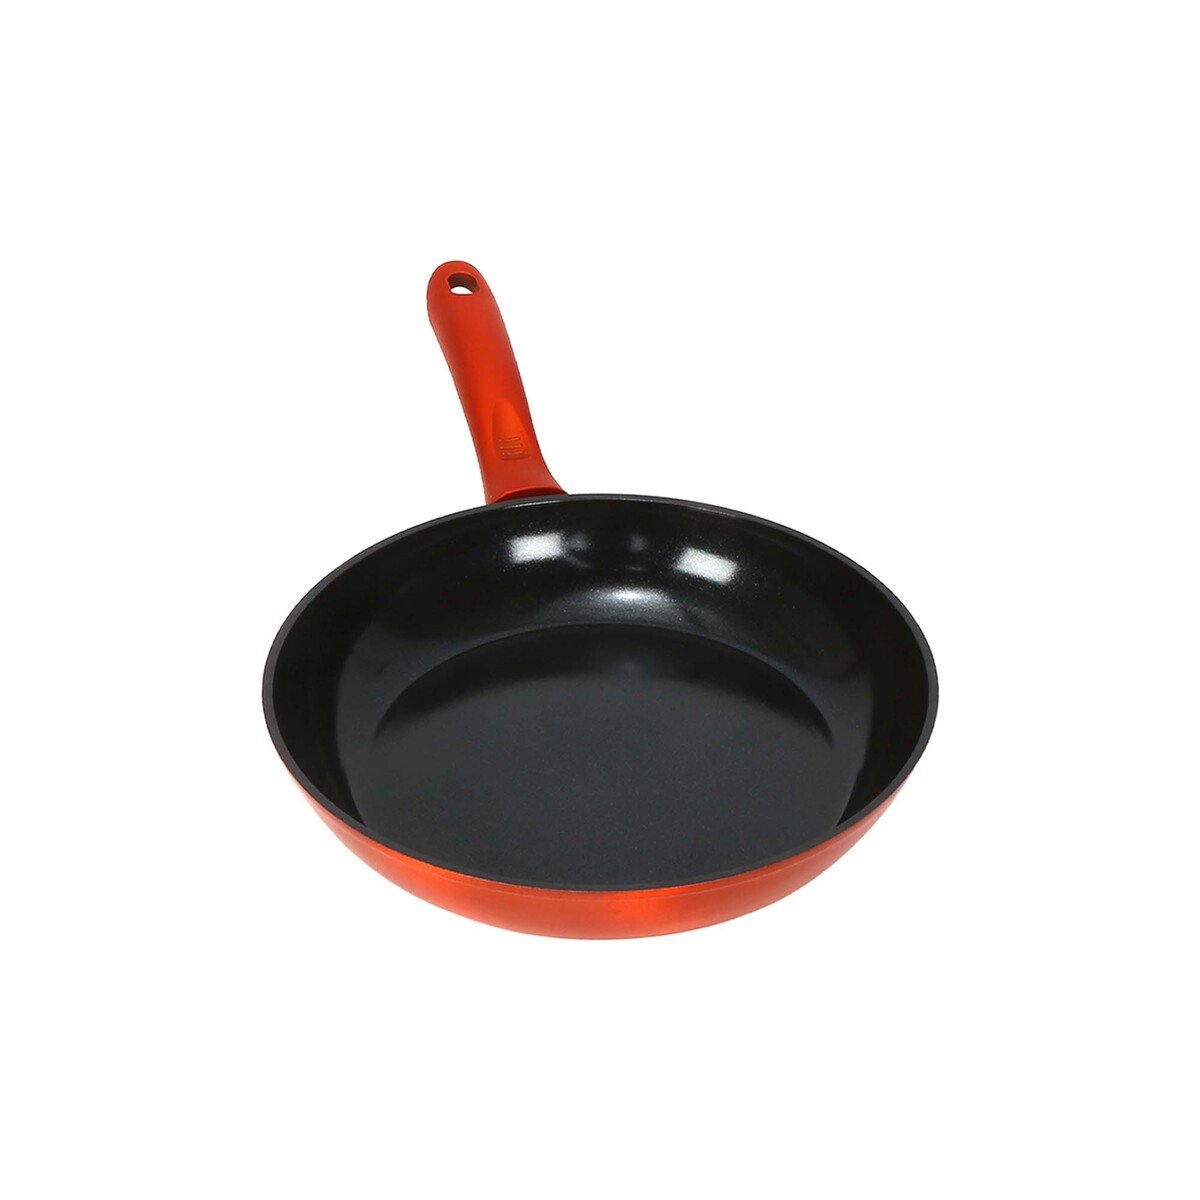 Chefline Induction Base Ceramic Fry Pan, 30 cm, Red, DZJ30